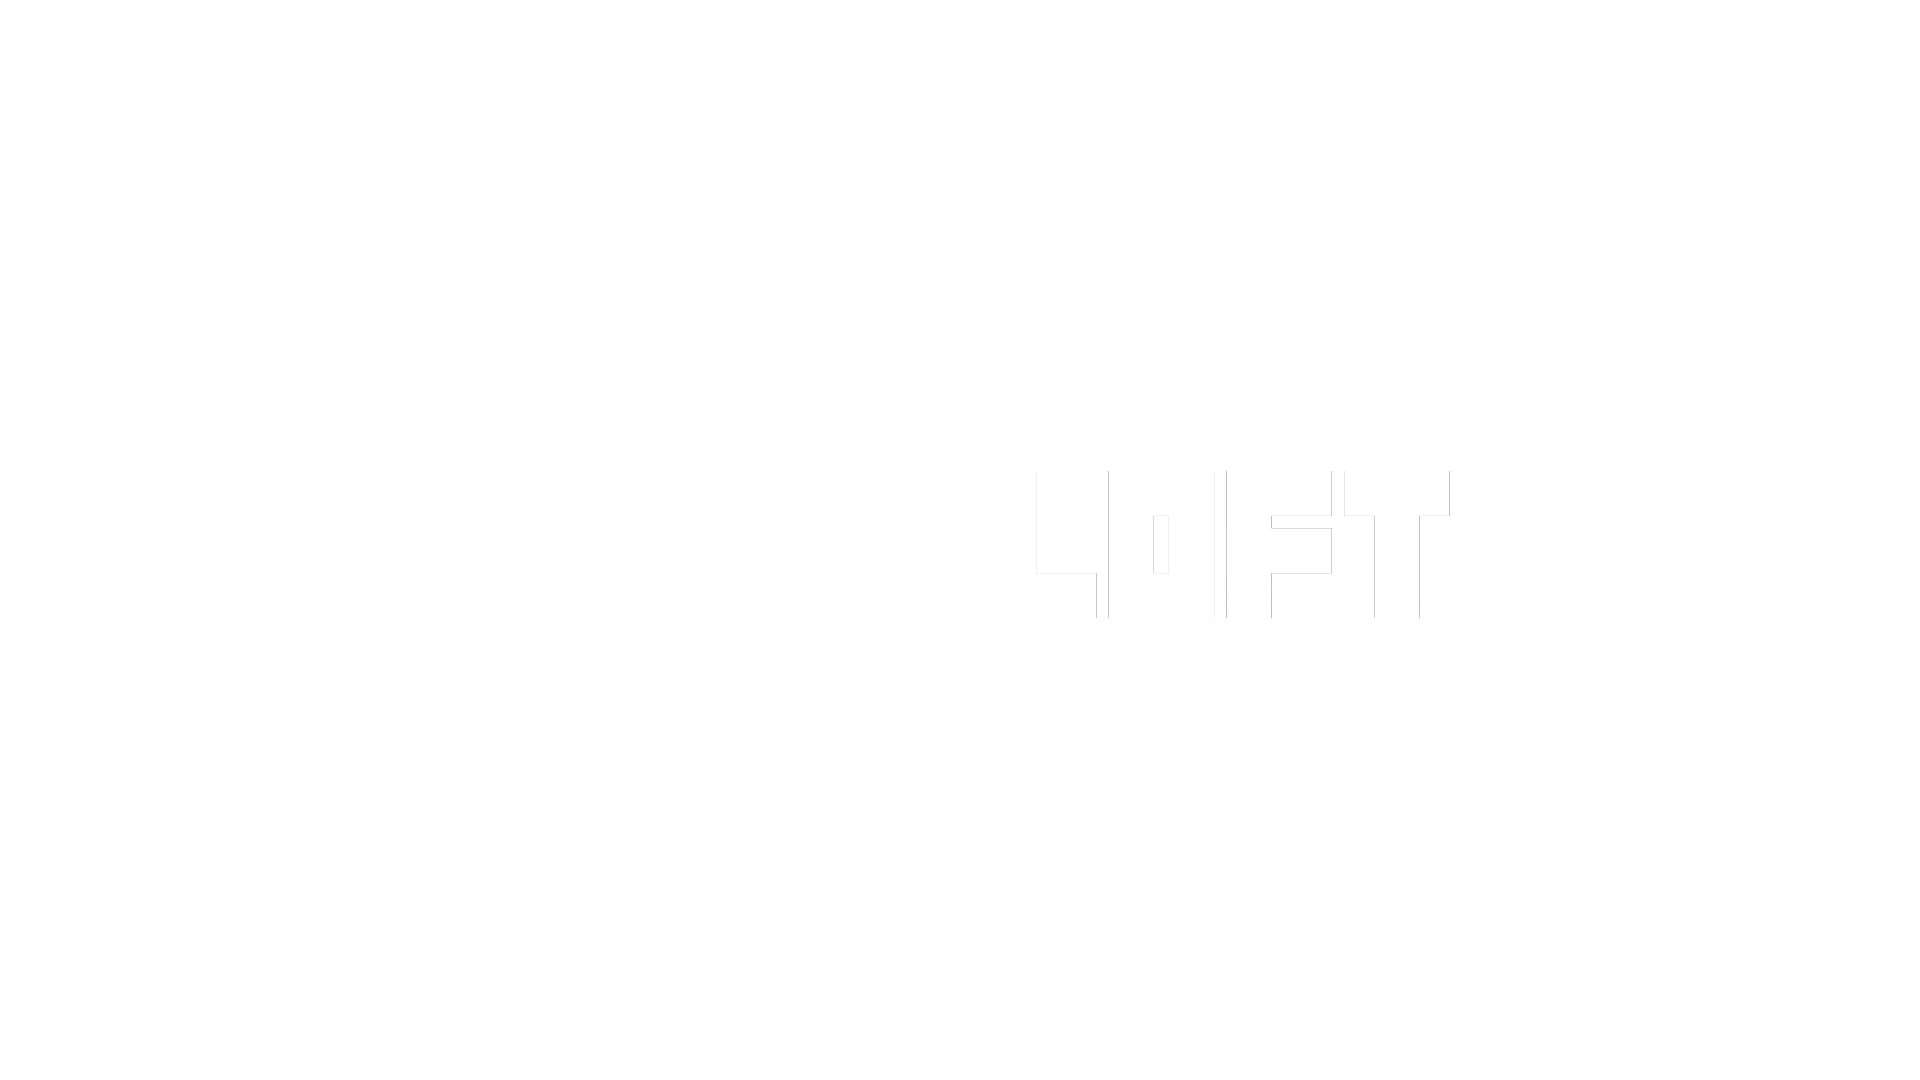 Loft Loveloft Loftlounge Hateloft Sticker by LOFT LOUNGE